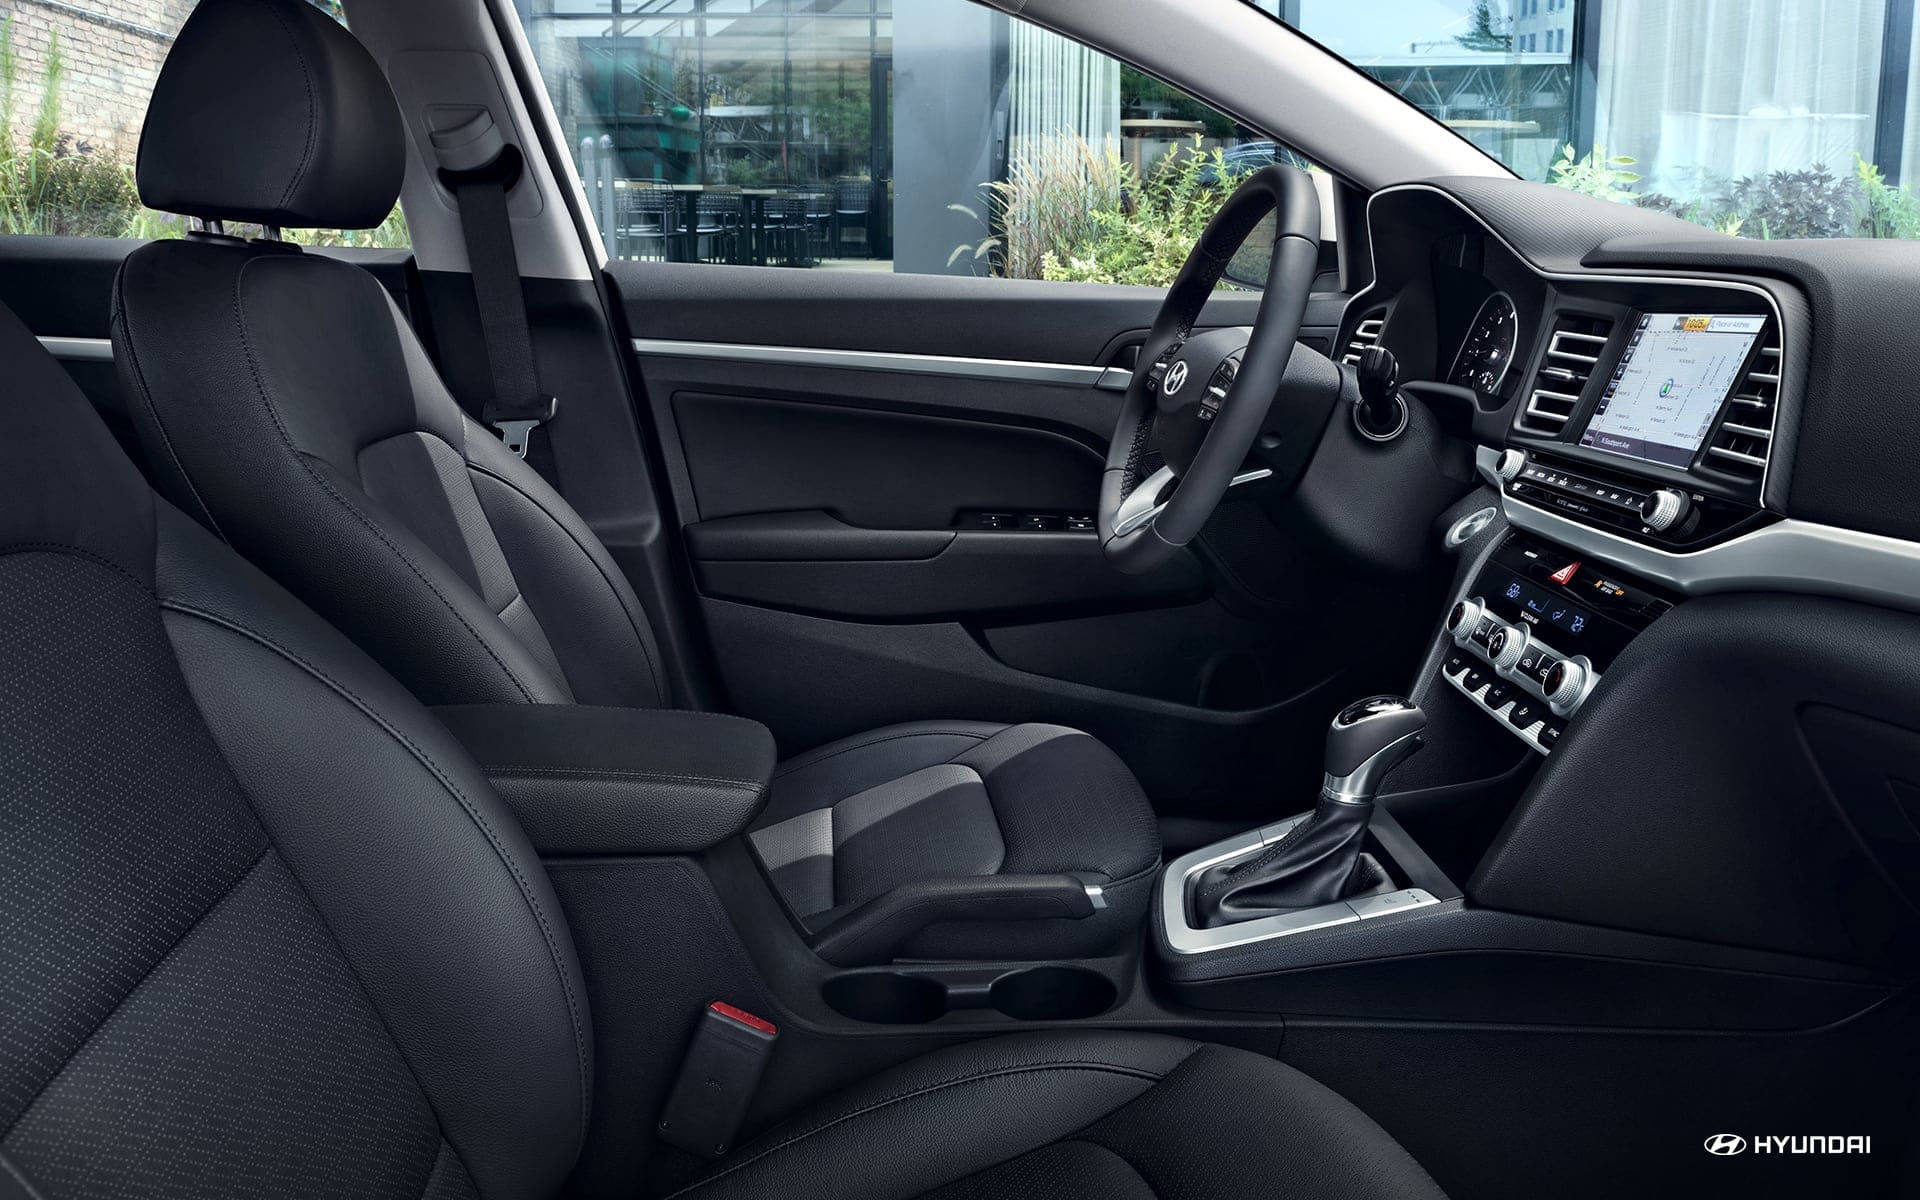 2019 Hyundai Elantra Front Interior Side View